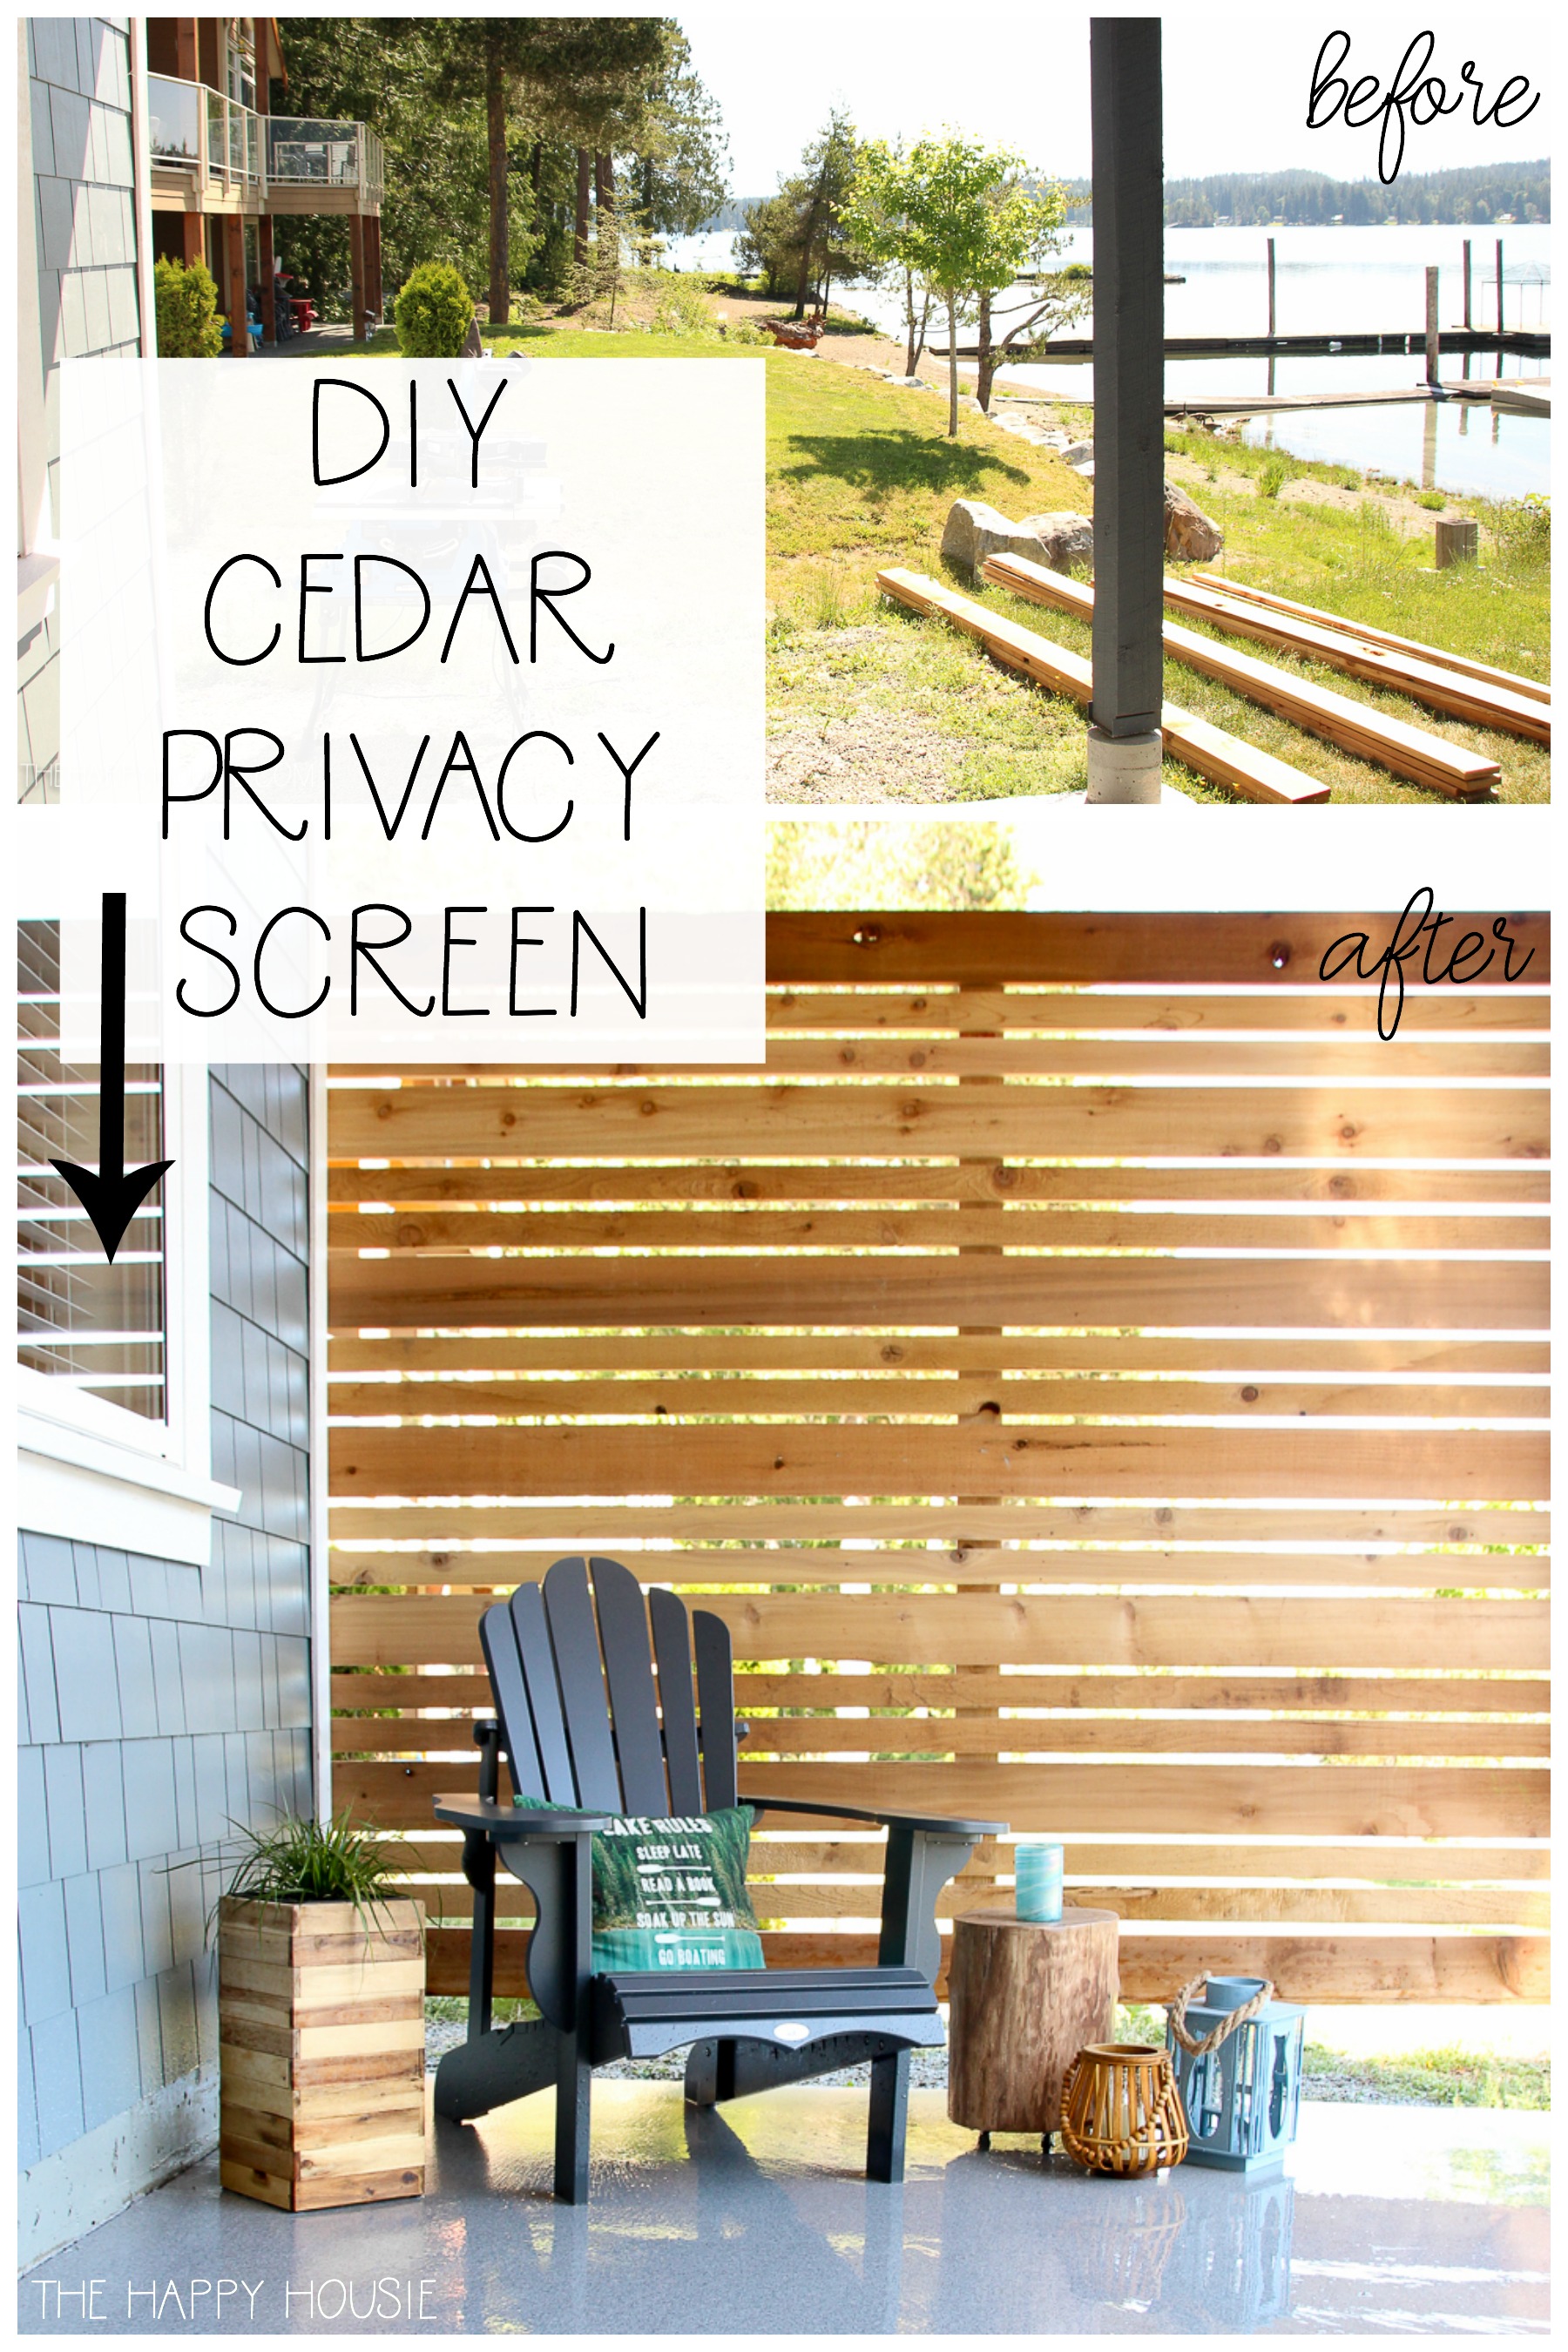 How to Build a DIY Cedar Privacy Screen | The Happy Housie